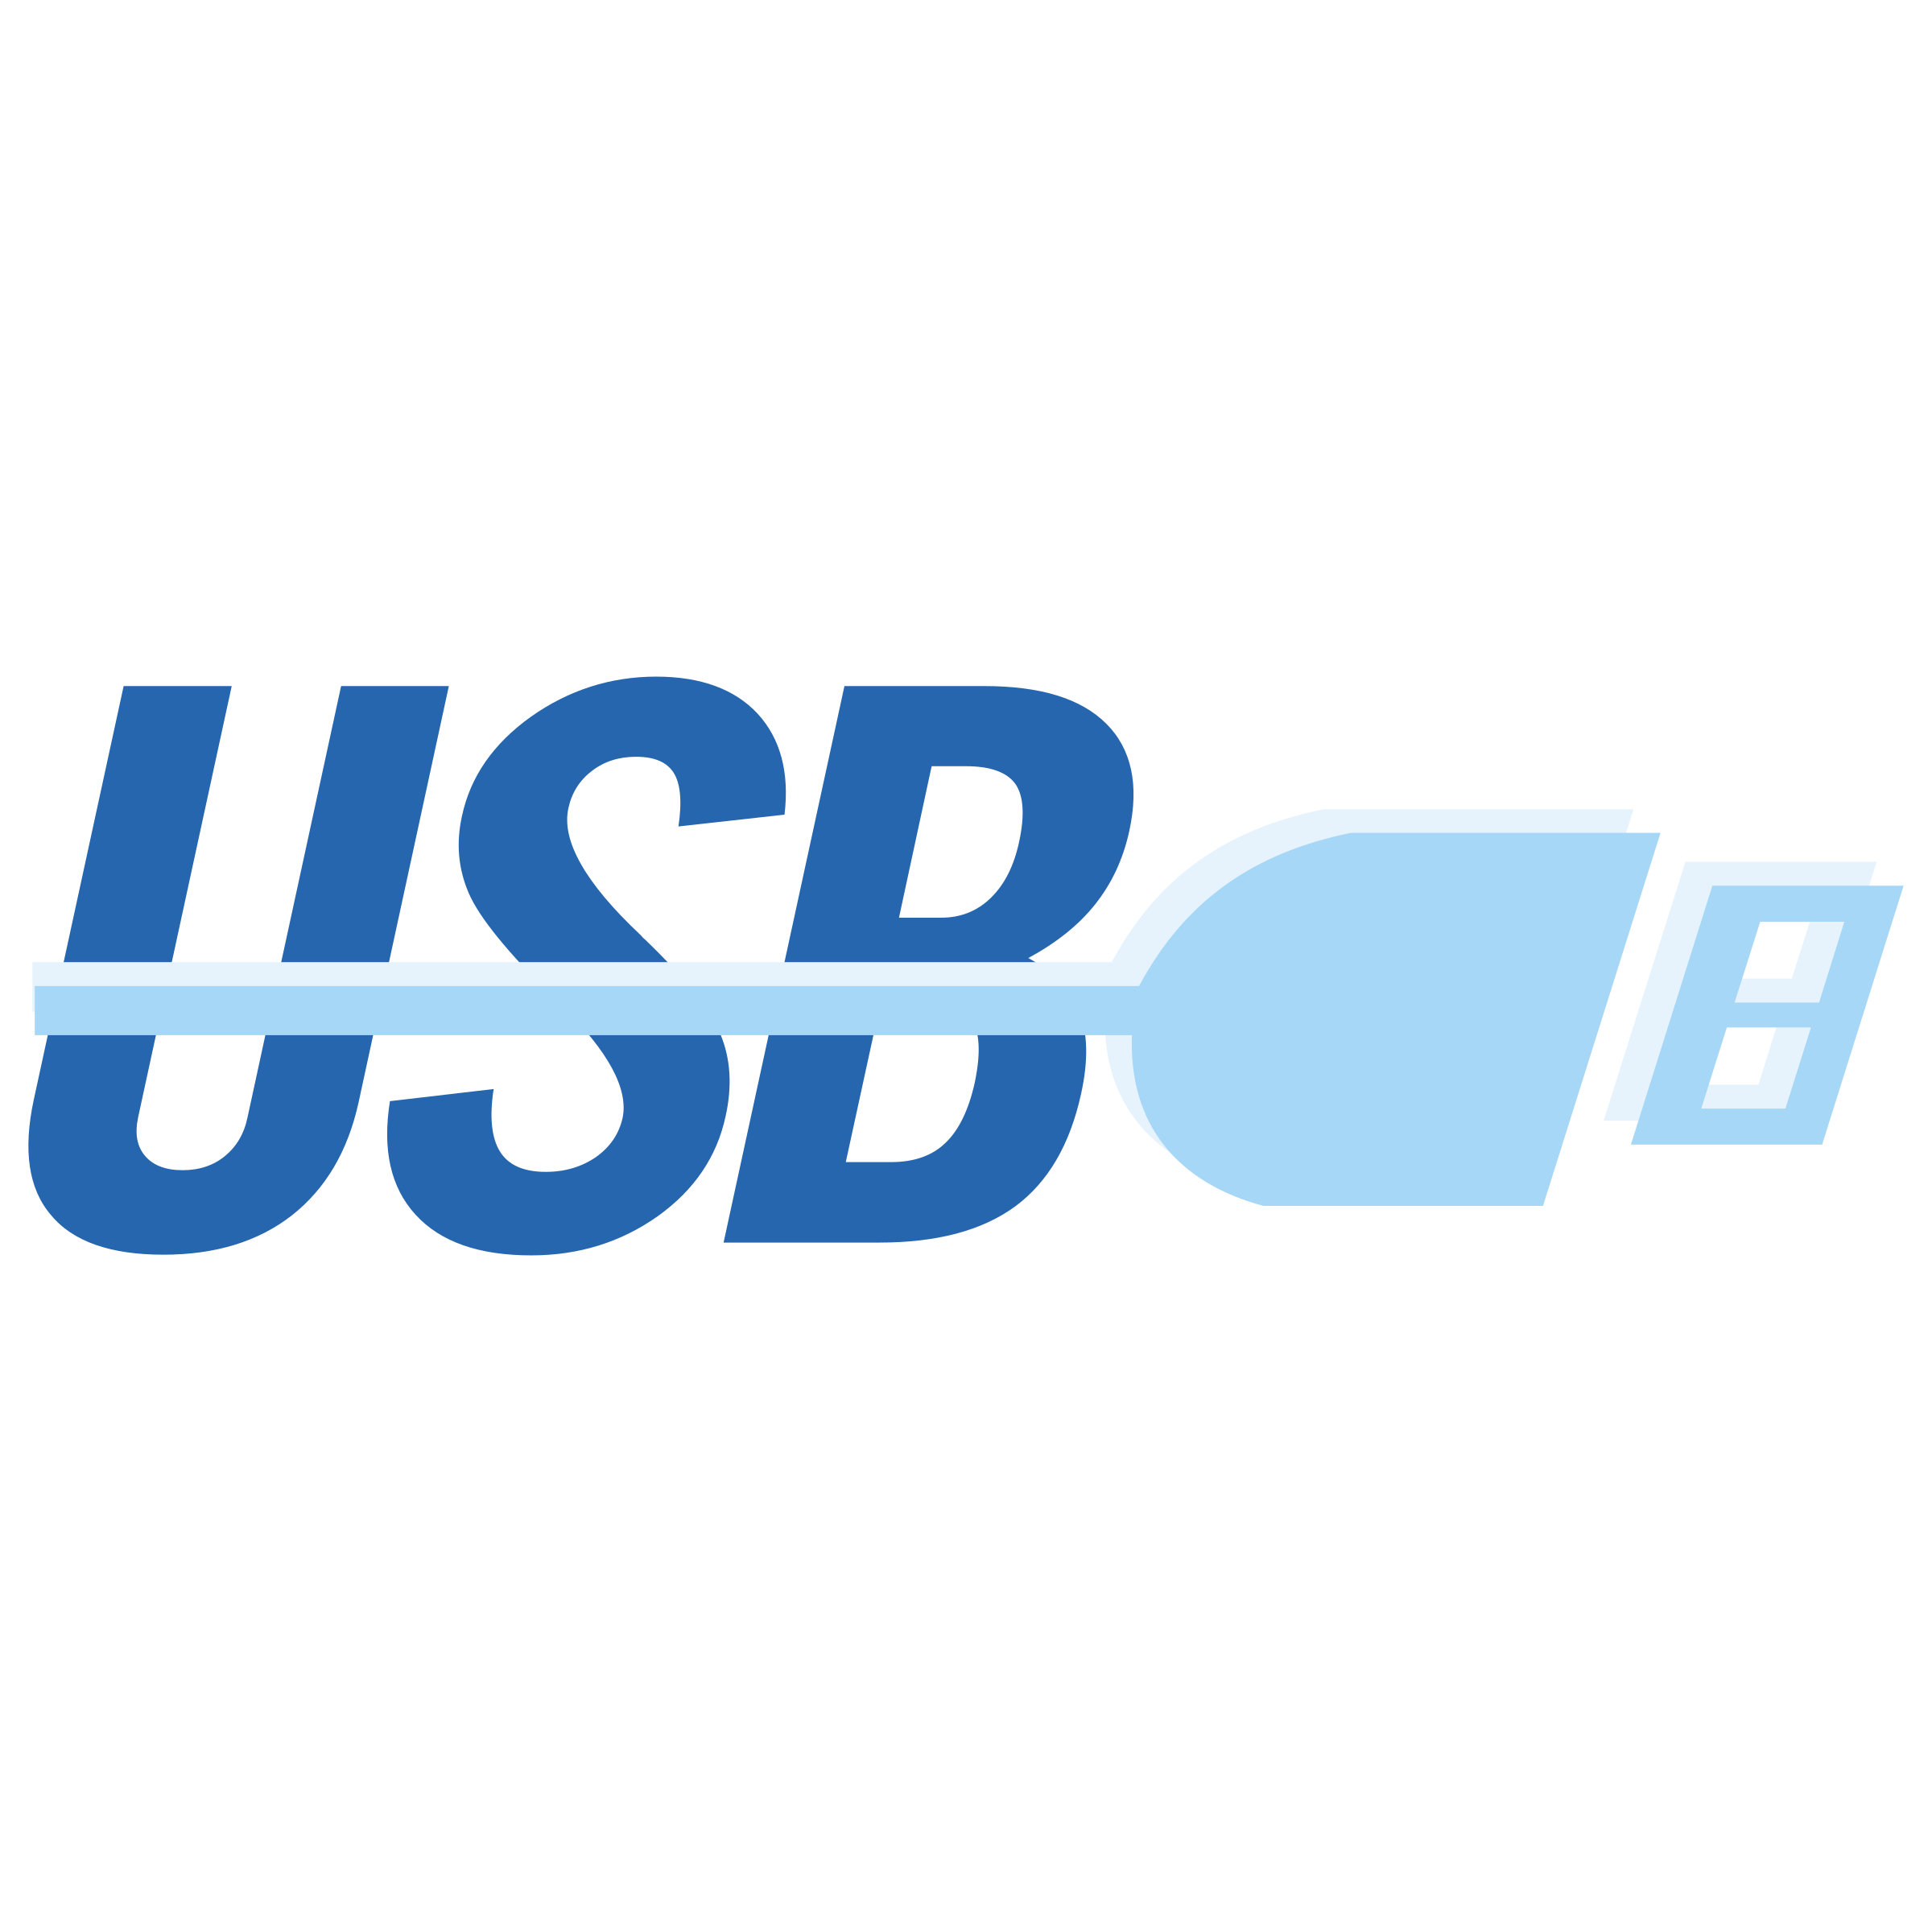 USB Logo - USB Logo PNG Transparent & SVG Vector